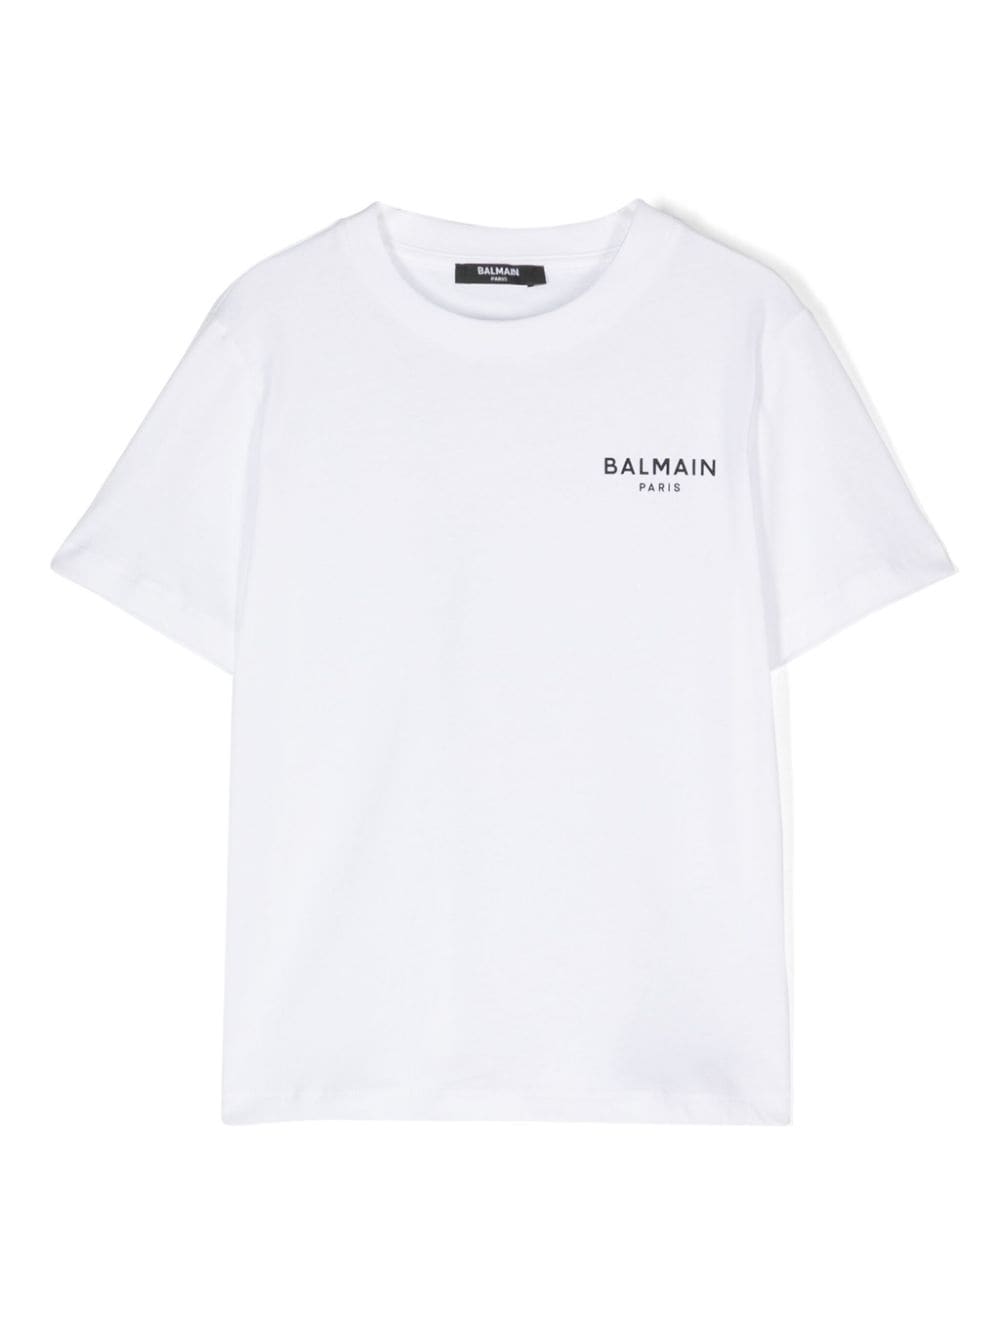 T-shirt bianca mini logo nero